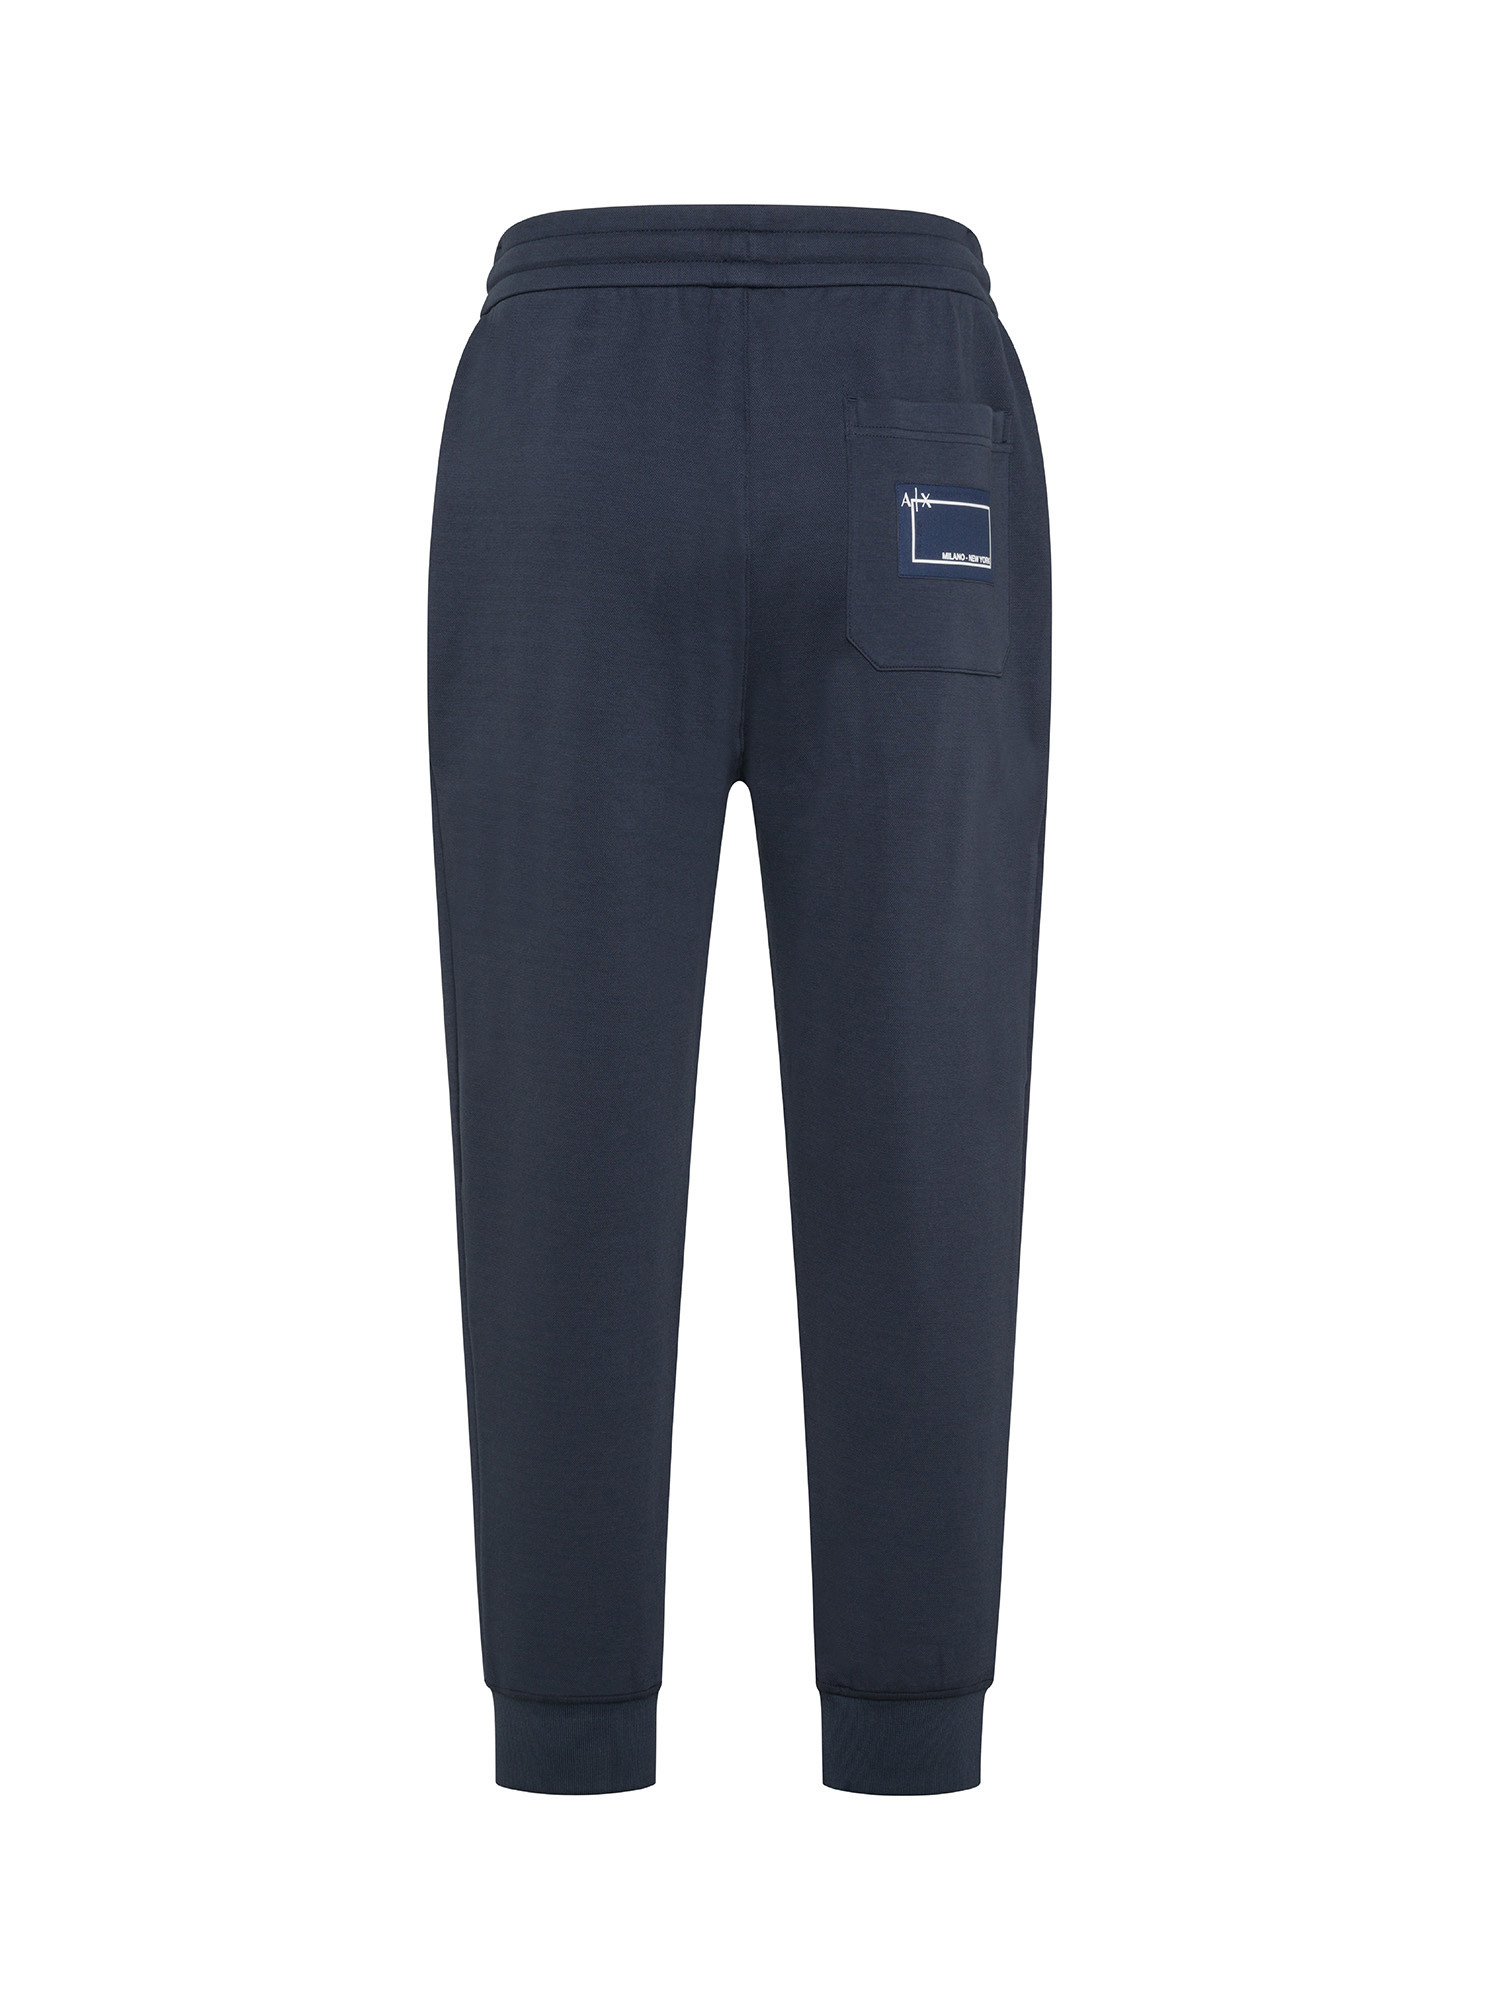 Armani Exchange - Sweatpants in fleece, Dark Blue, large image number 1